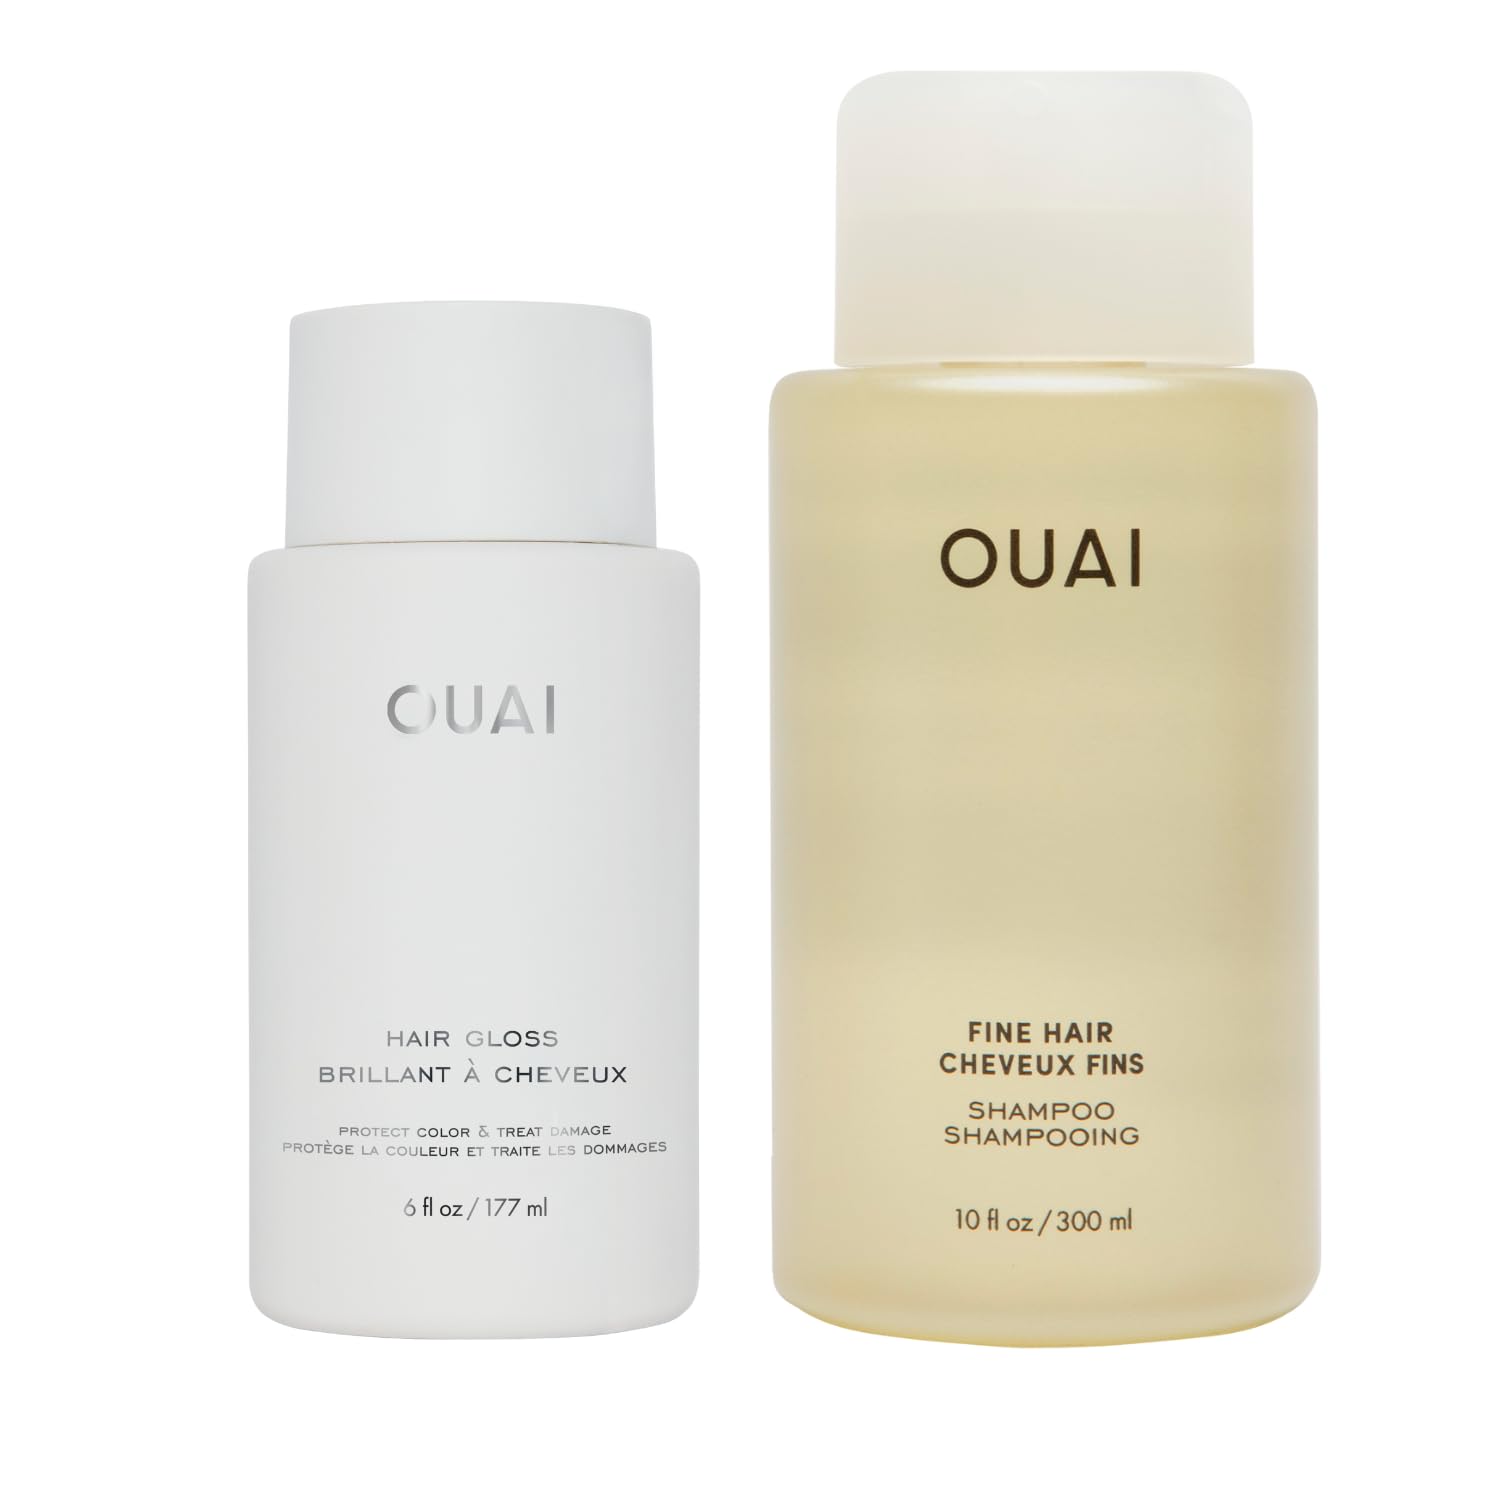 OUAI Hair Gloss Bundle, Fine Hair - Includes Hair Gloss and Fine Shampoo - Volumizing, Frizz-Control Hair Bundle (2 Count, 6 Oz/ 10 Fl Oz)